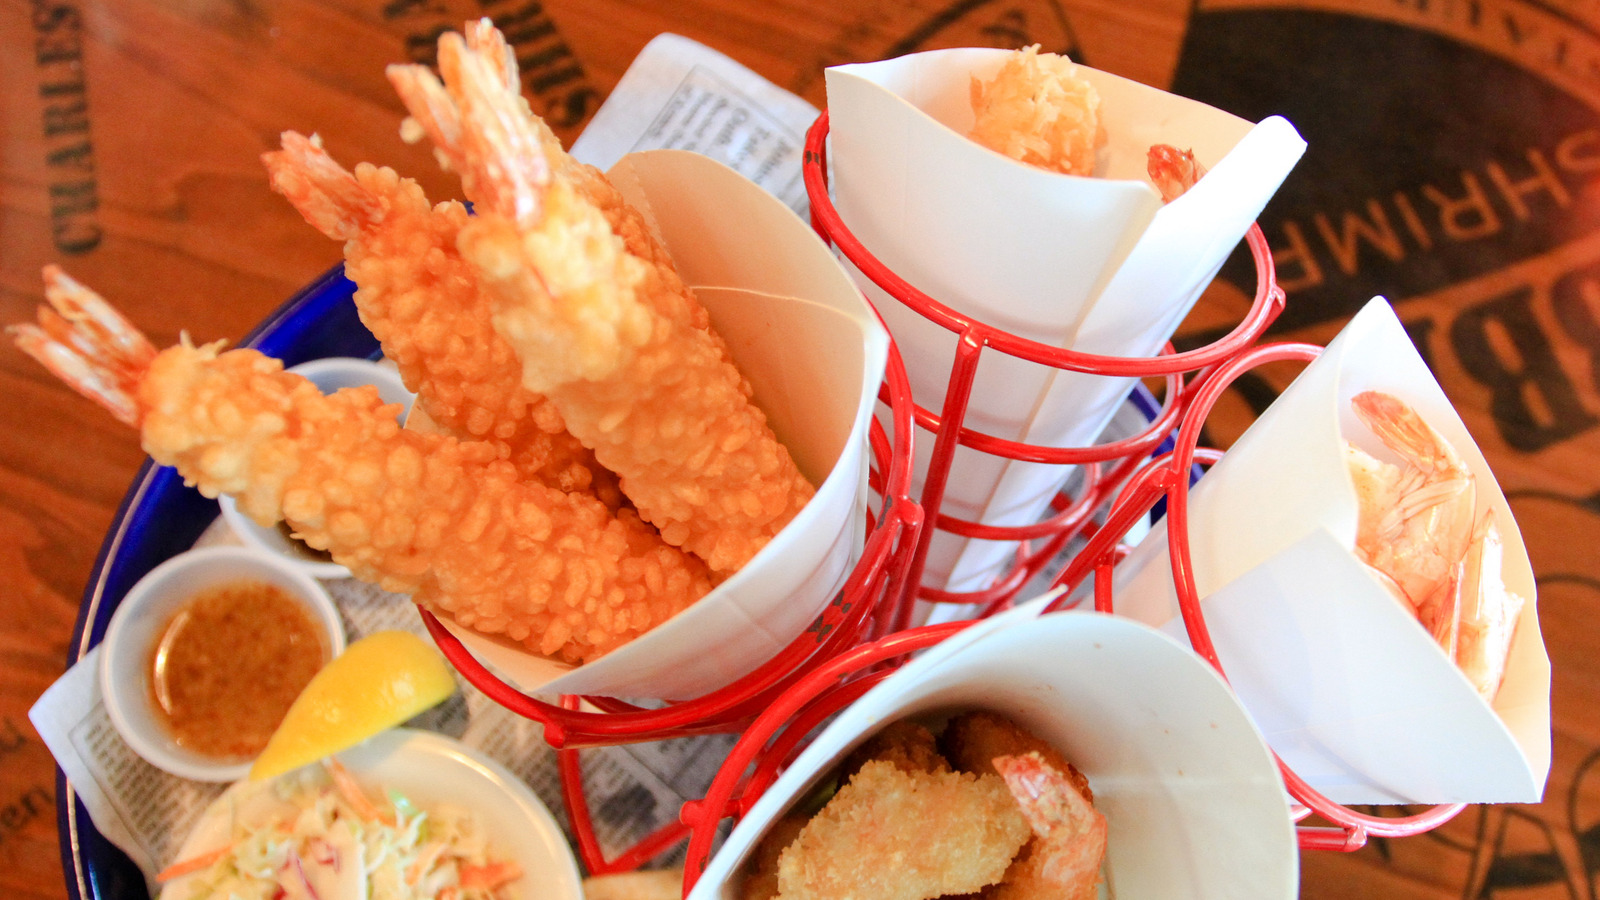 Bubba Gump Shrimp Deals for Seniors on Delicious Meals - Popular Senior Dishes at Bubba Gump Shrimp Co.